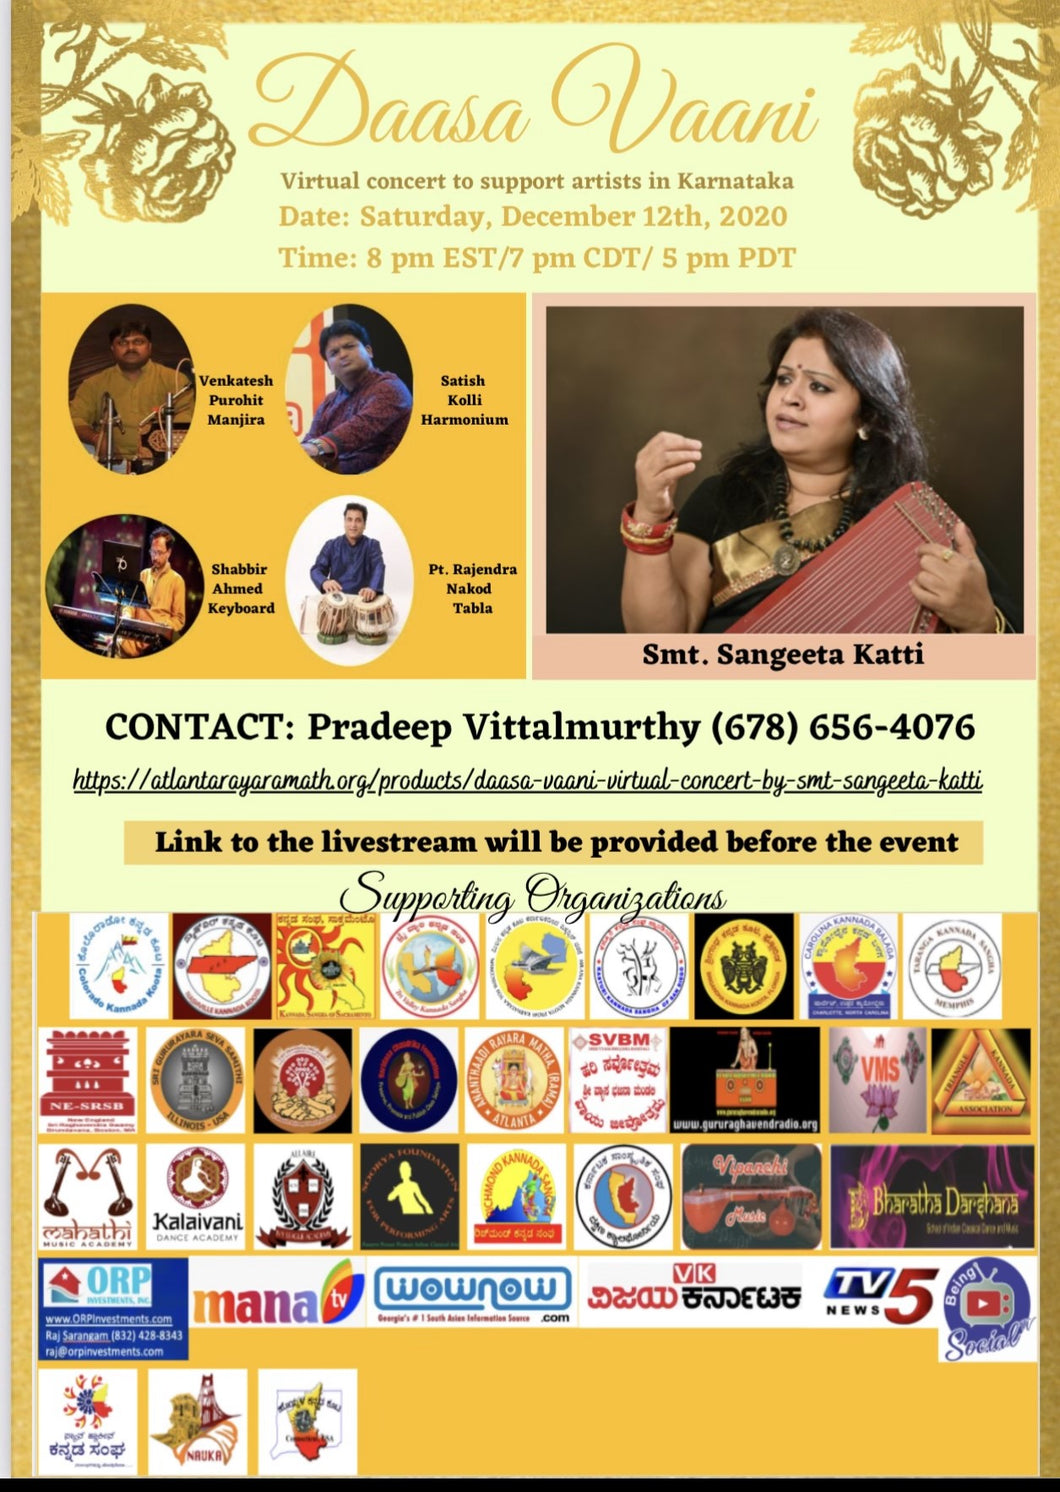 Daasa Vaani Virtual Concert by Smt. Sangeeta Katti